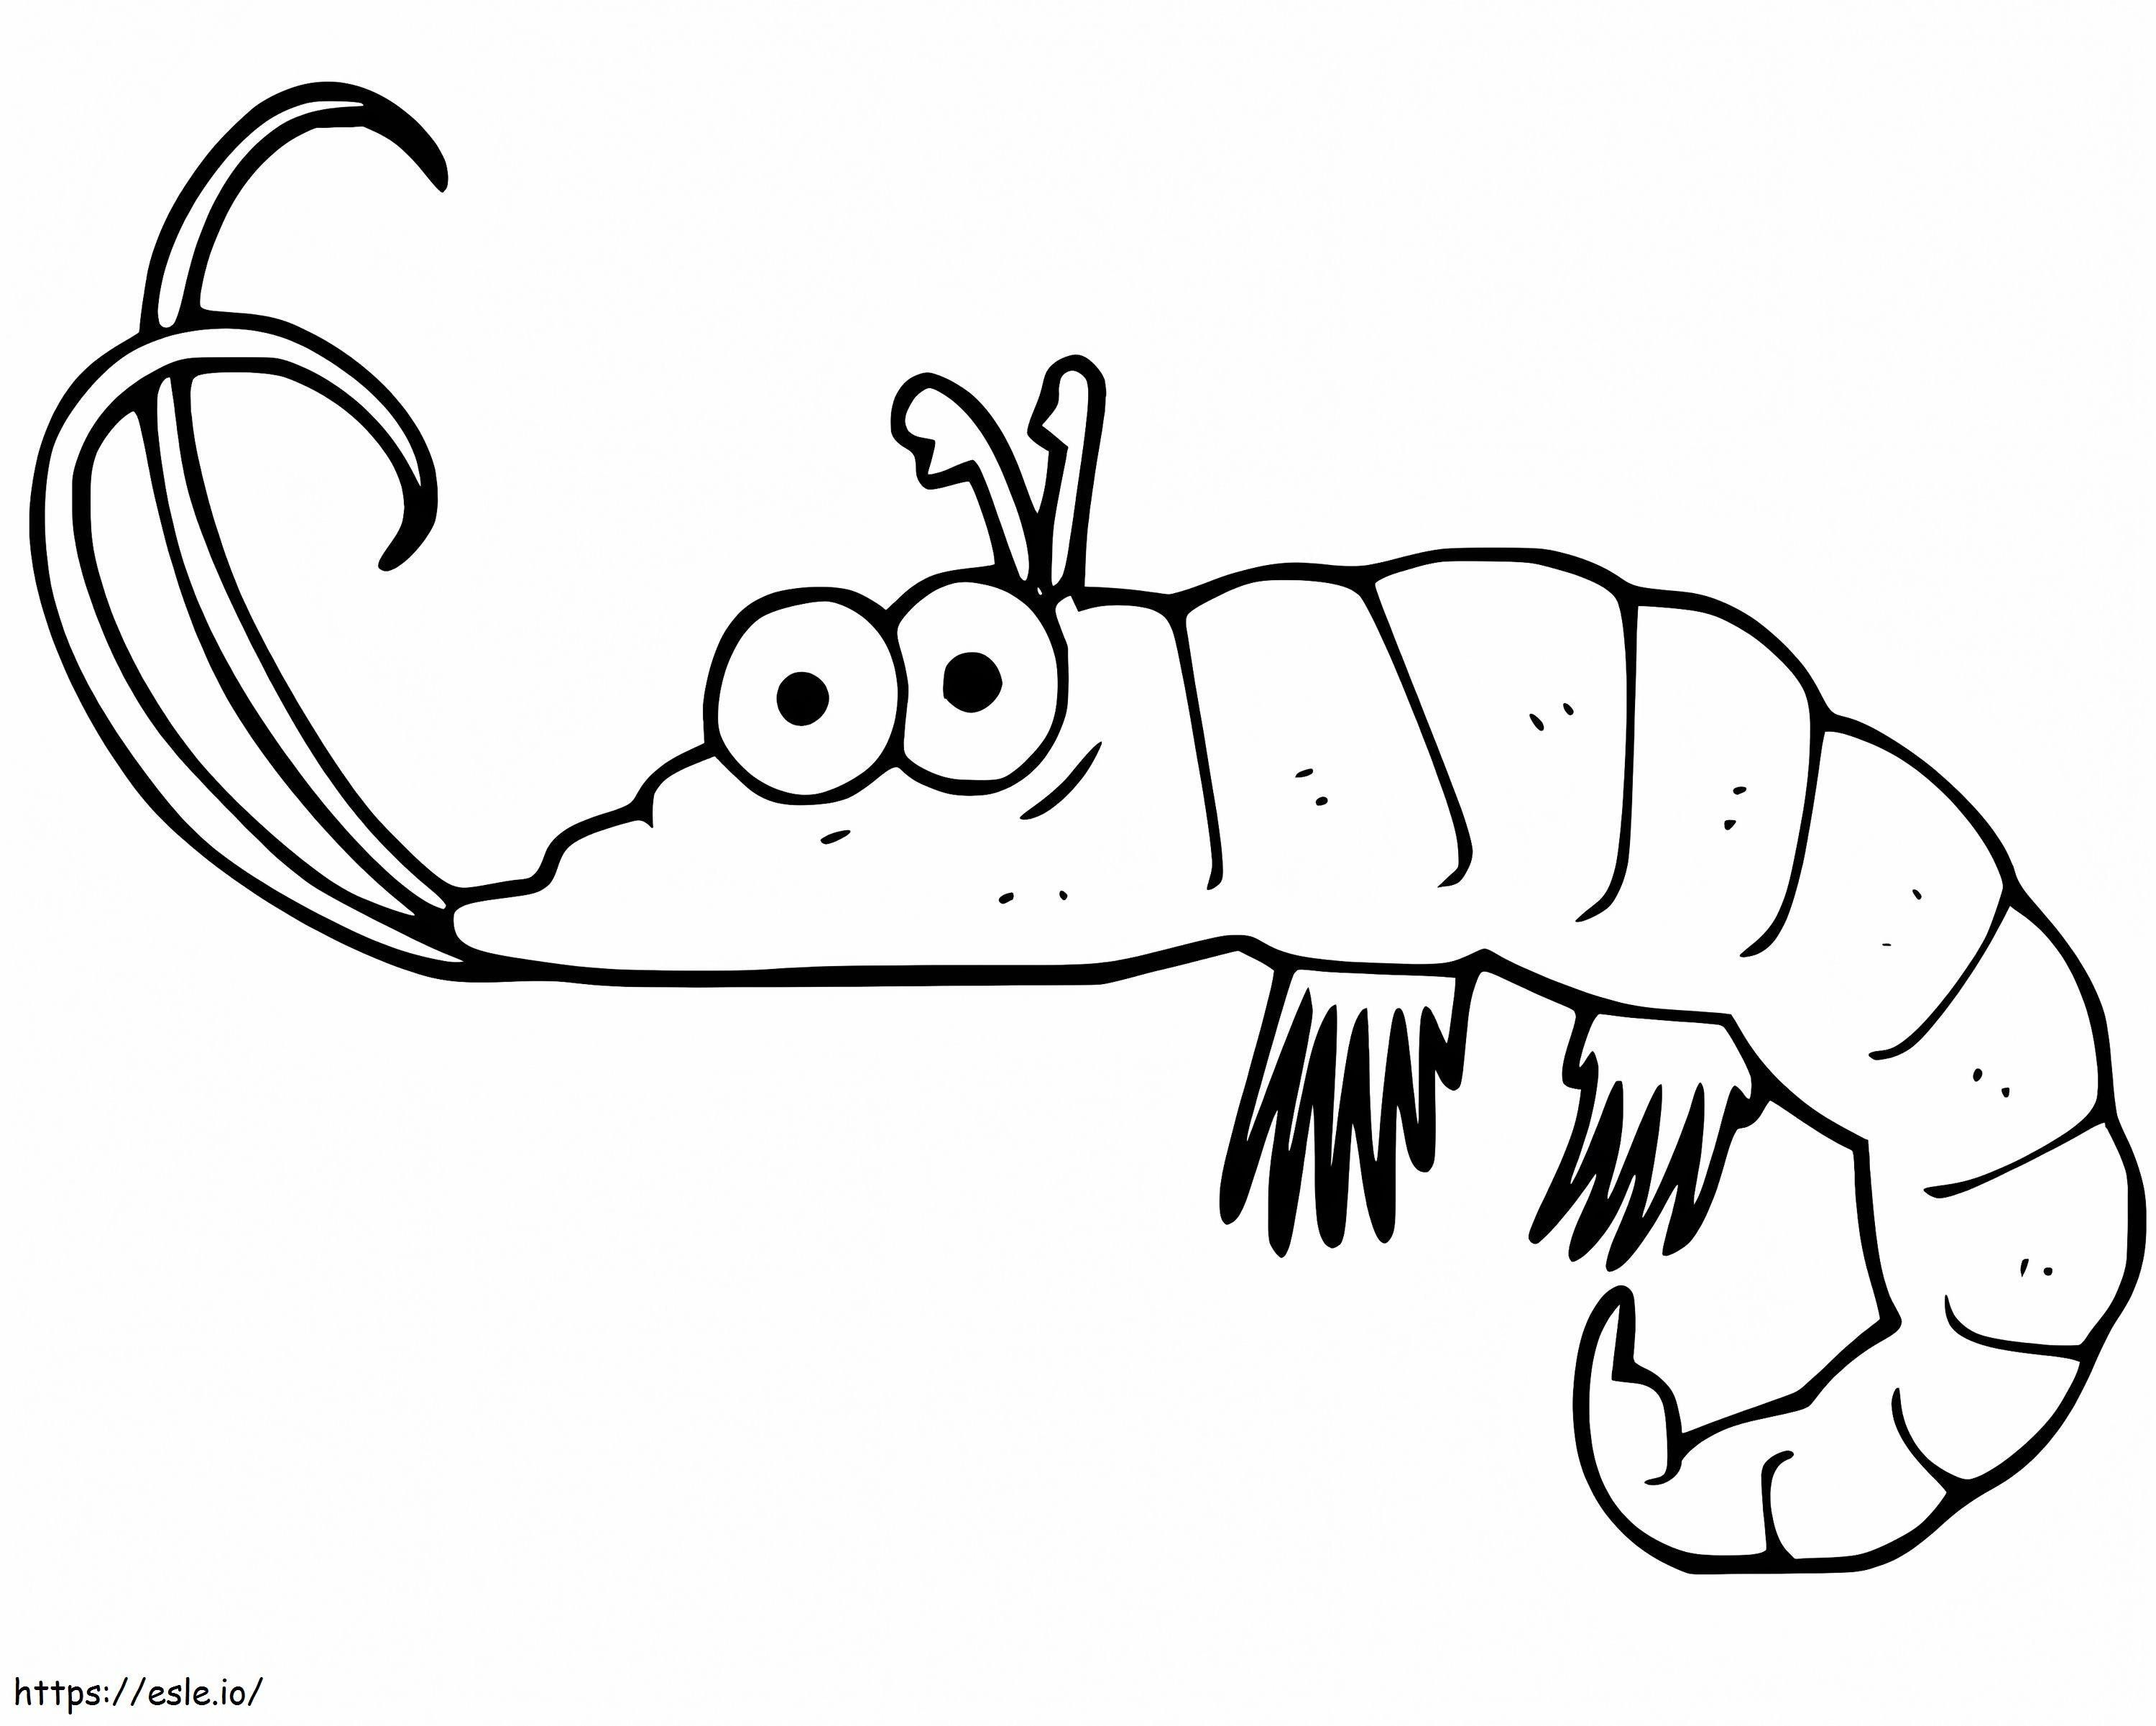 Cartoon Funny Shrimp coloring page